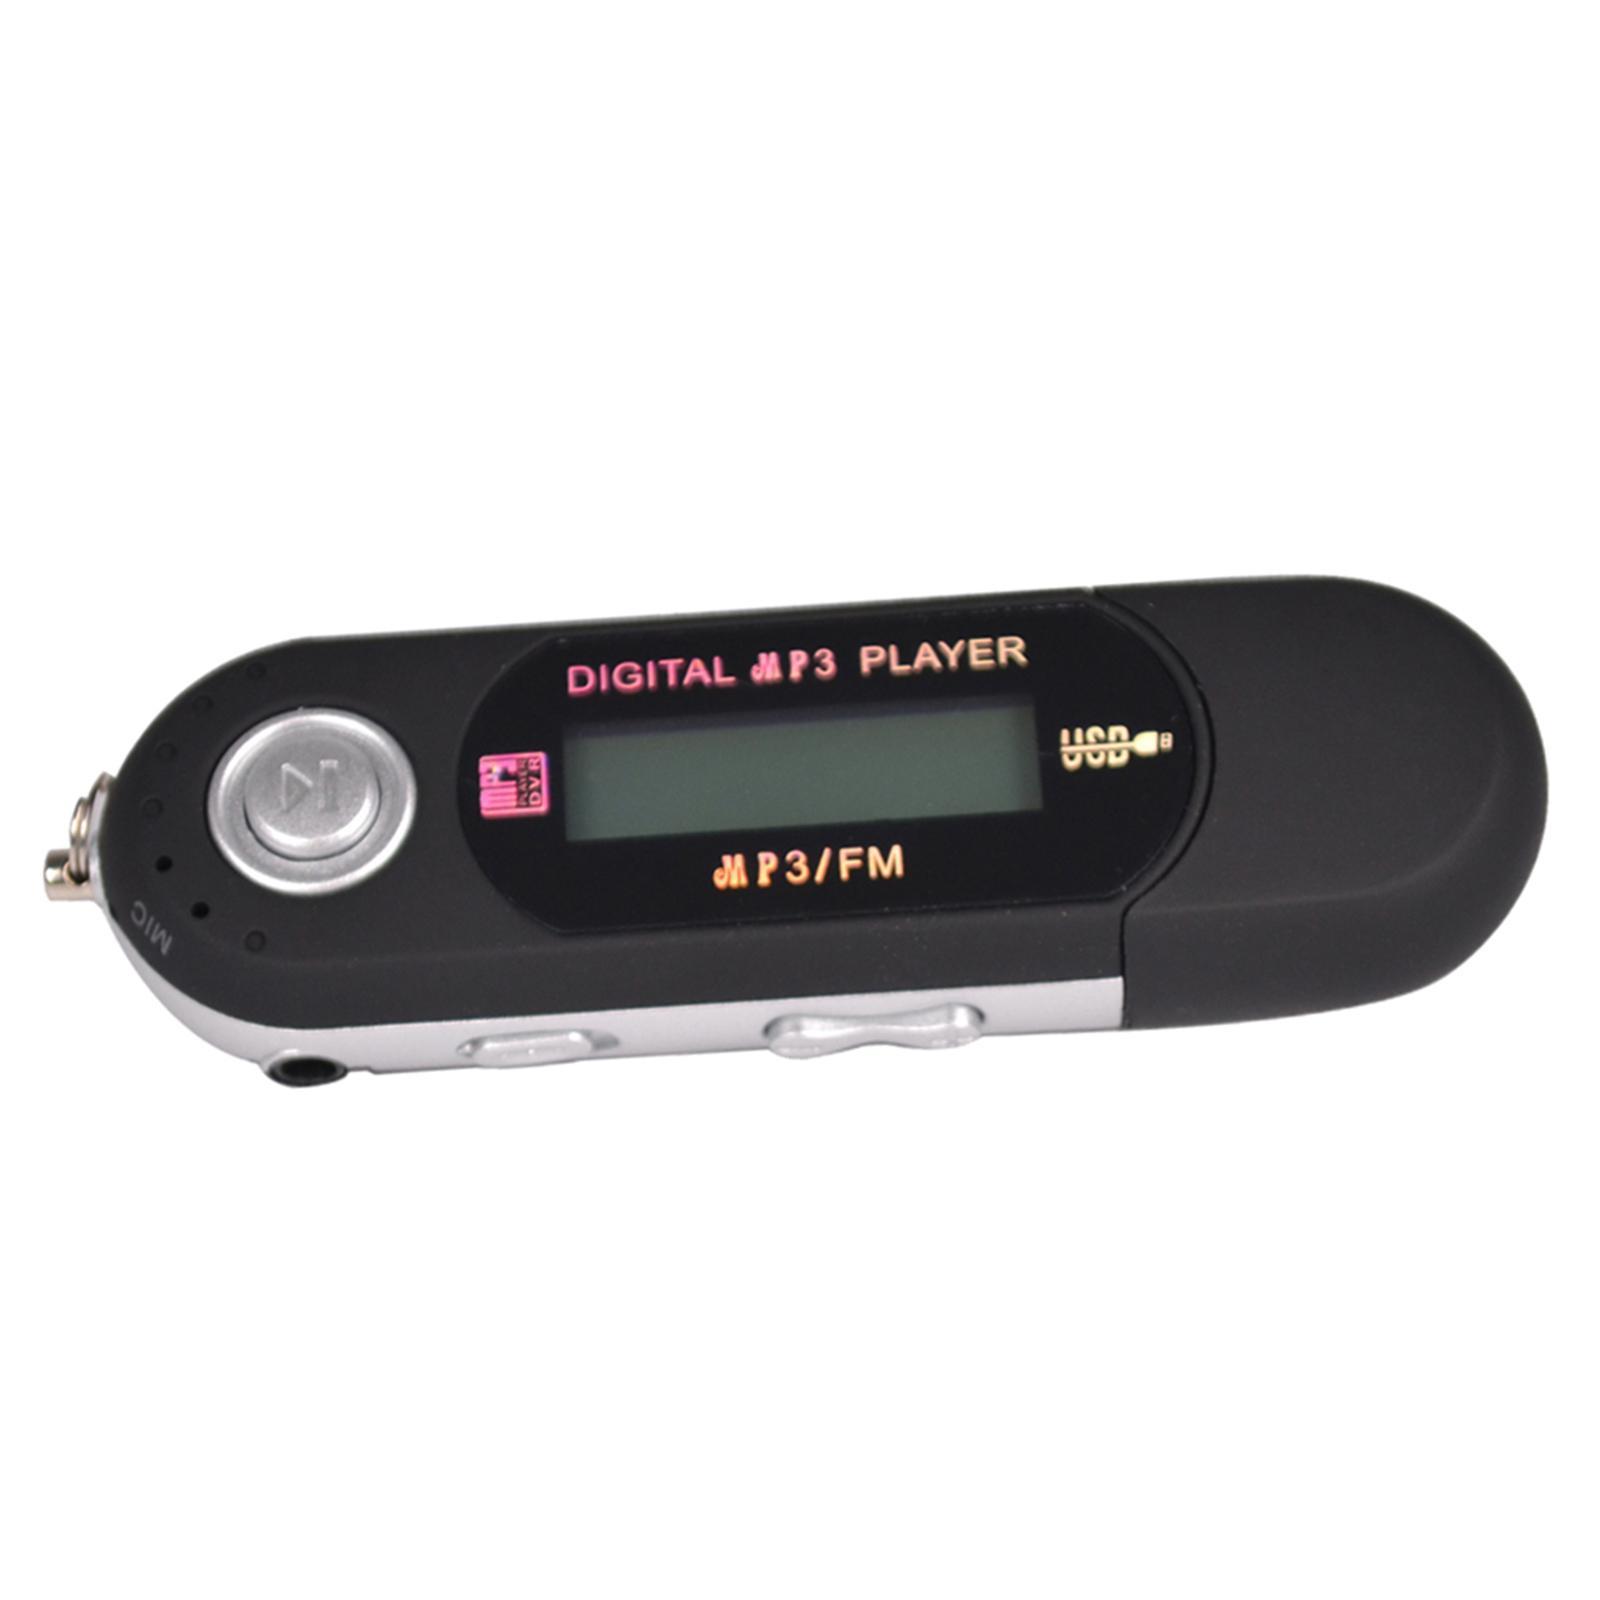 4GB LCD MP3 MP4 Music Video Media Player ,Black